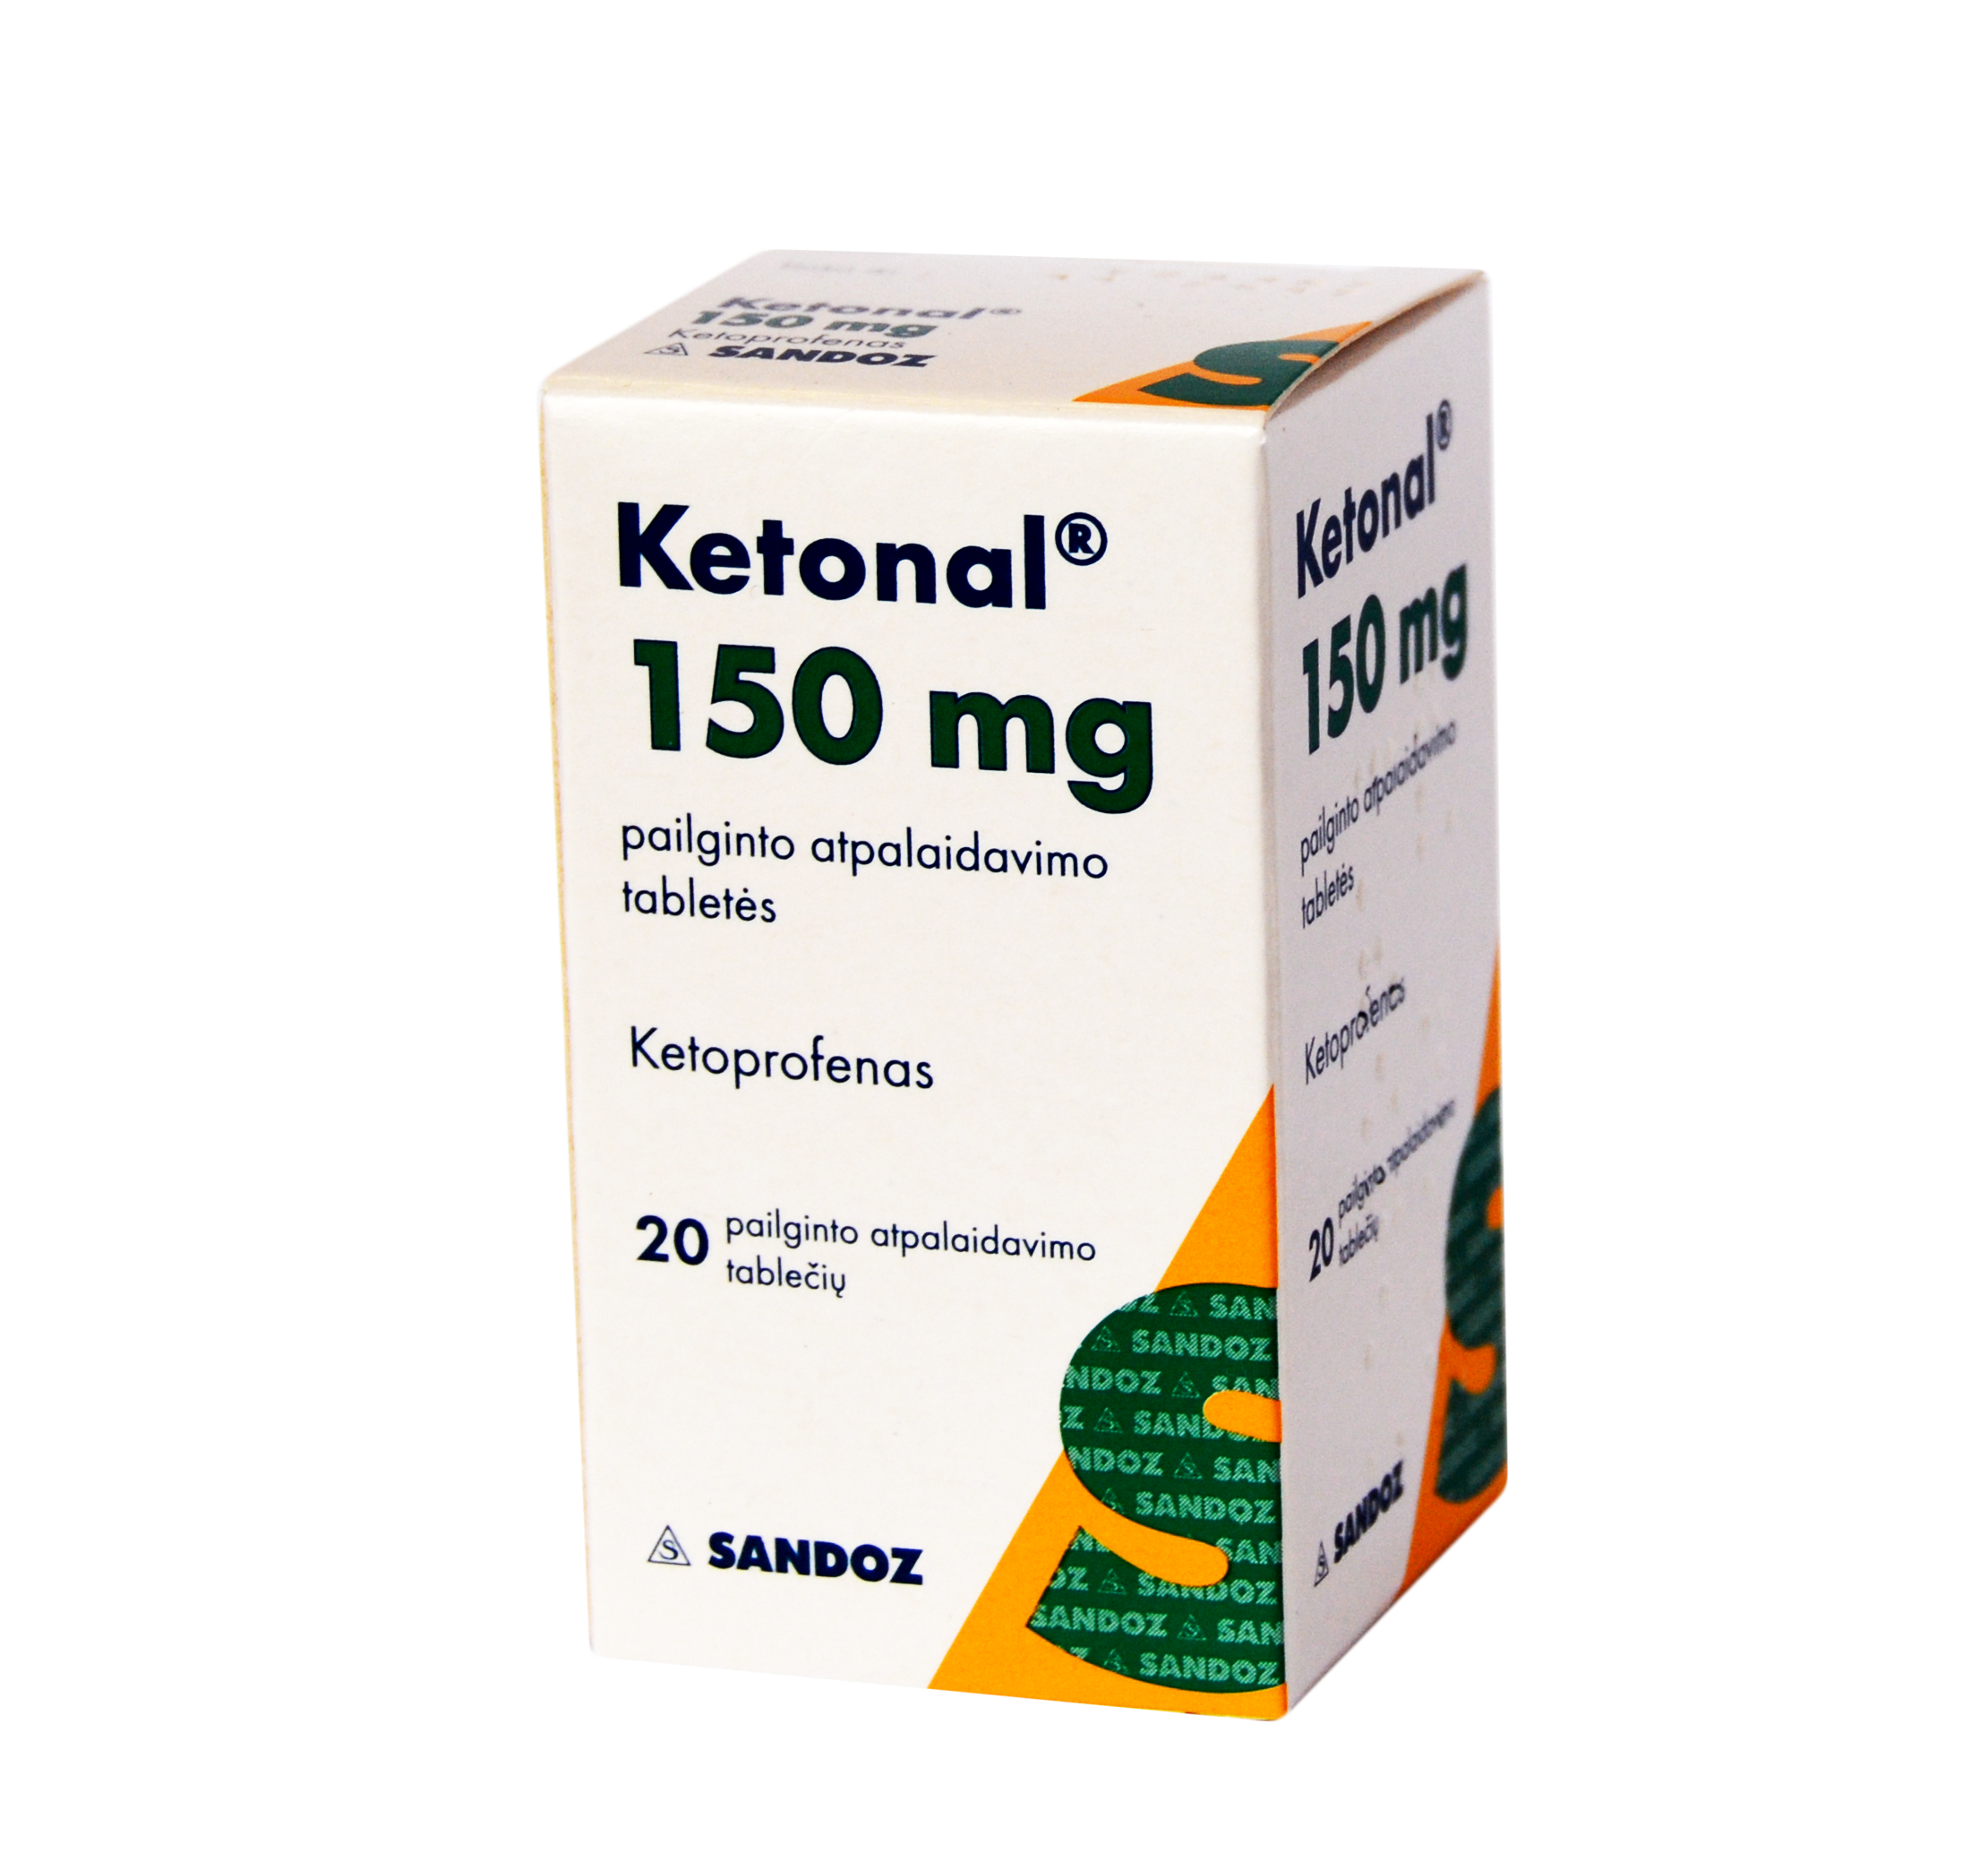 Ketonal forte mg tablete | Upute - Kreni zdravo!